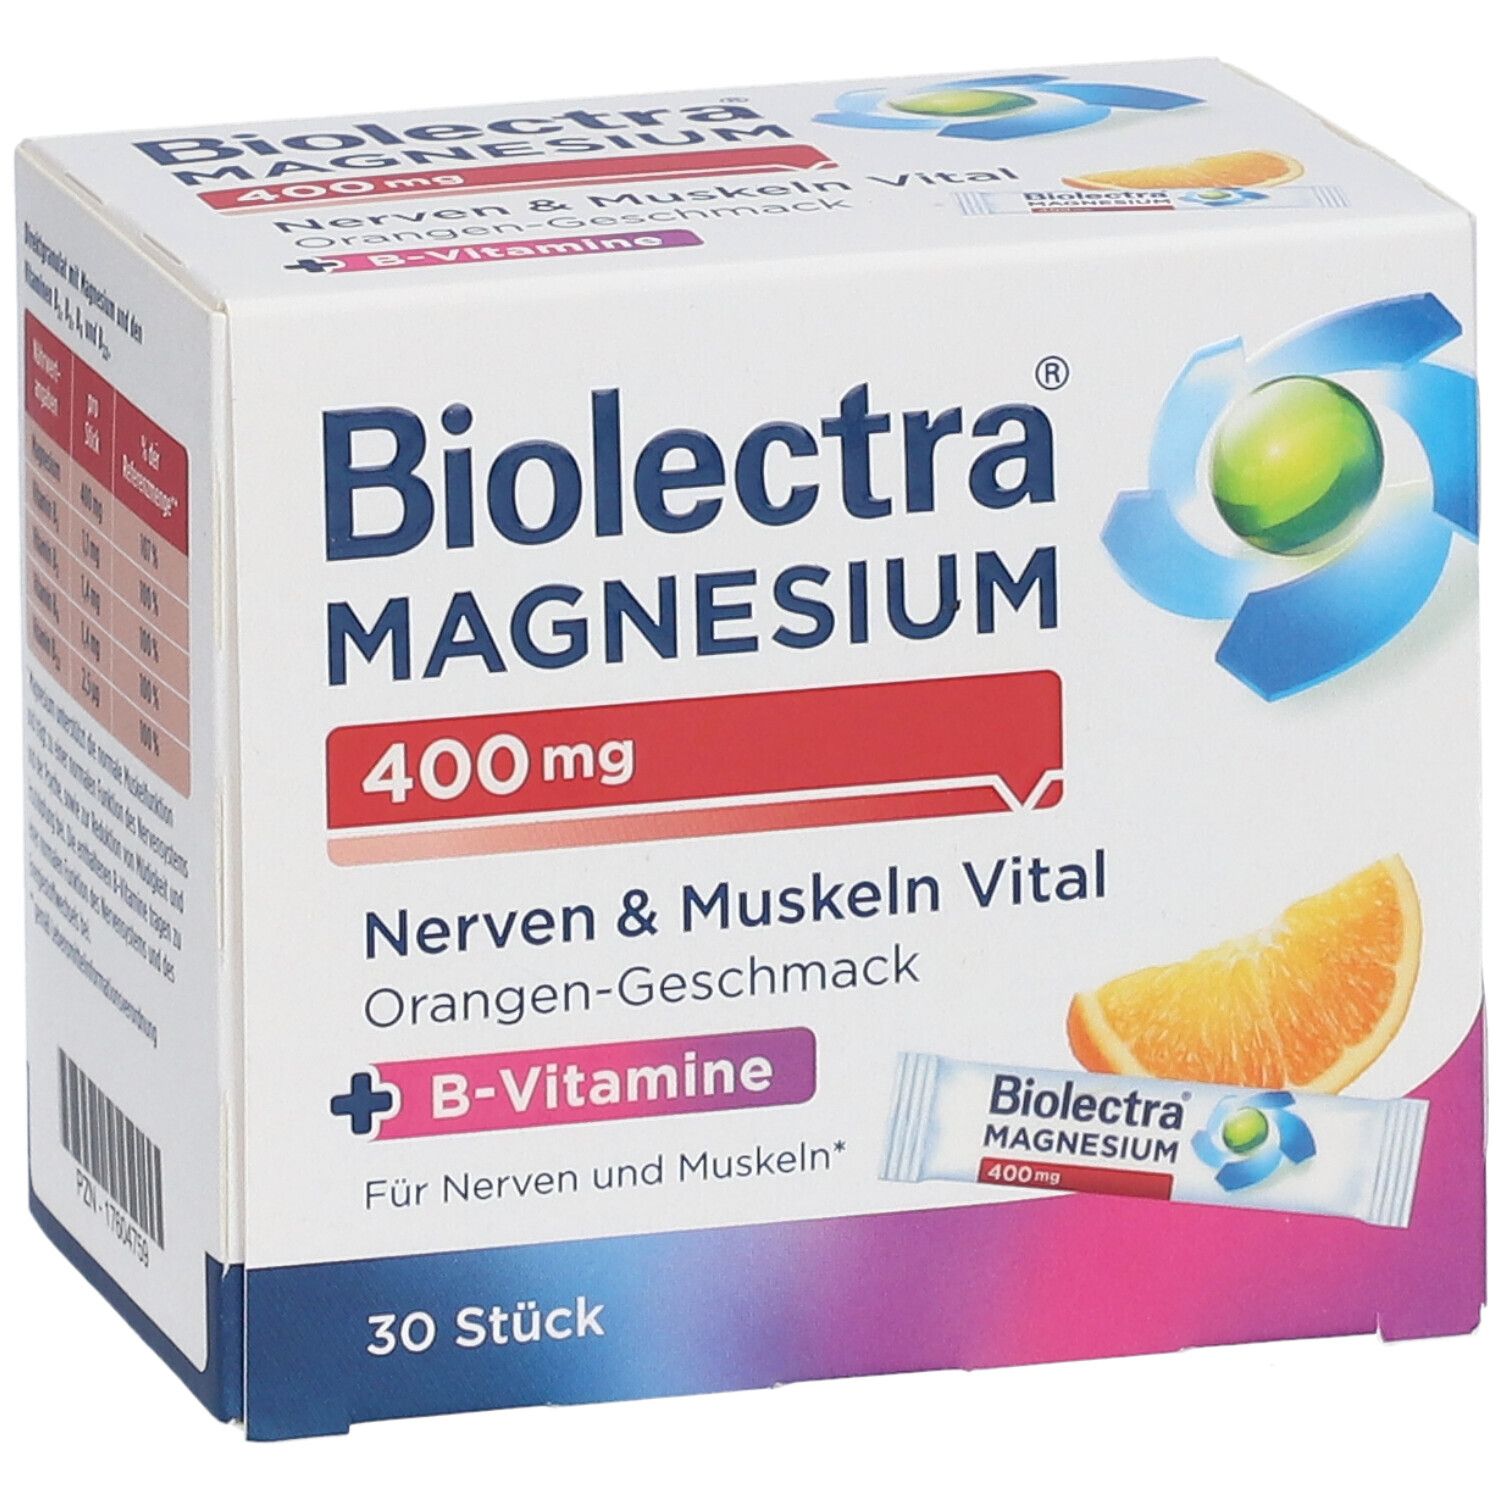 Biolectra® Magnesium 400mg Nerven & Muskeln Vital